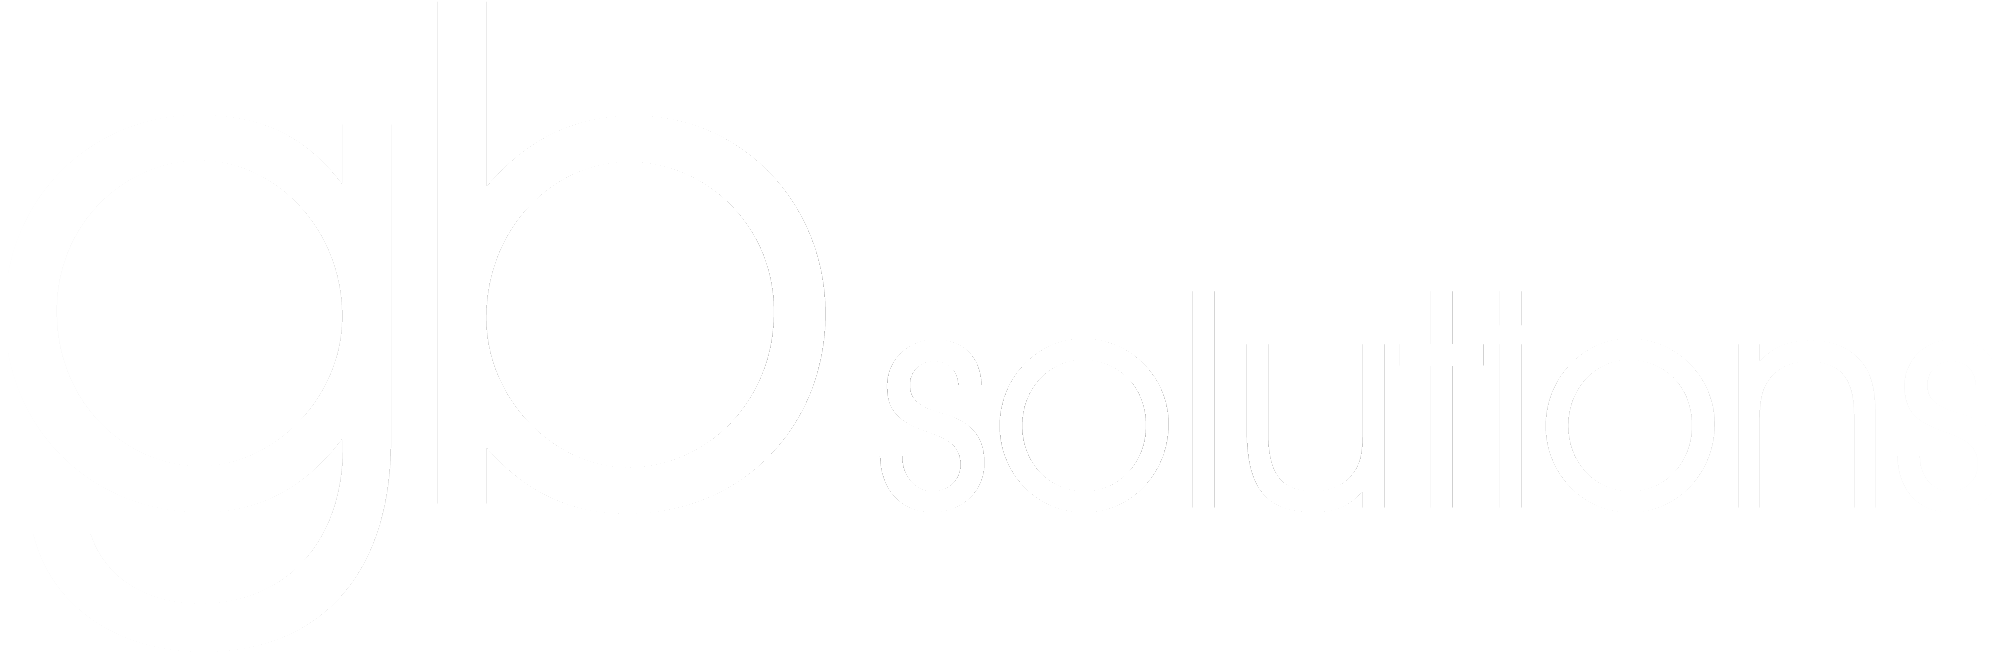 gbsolutions-logo